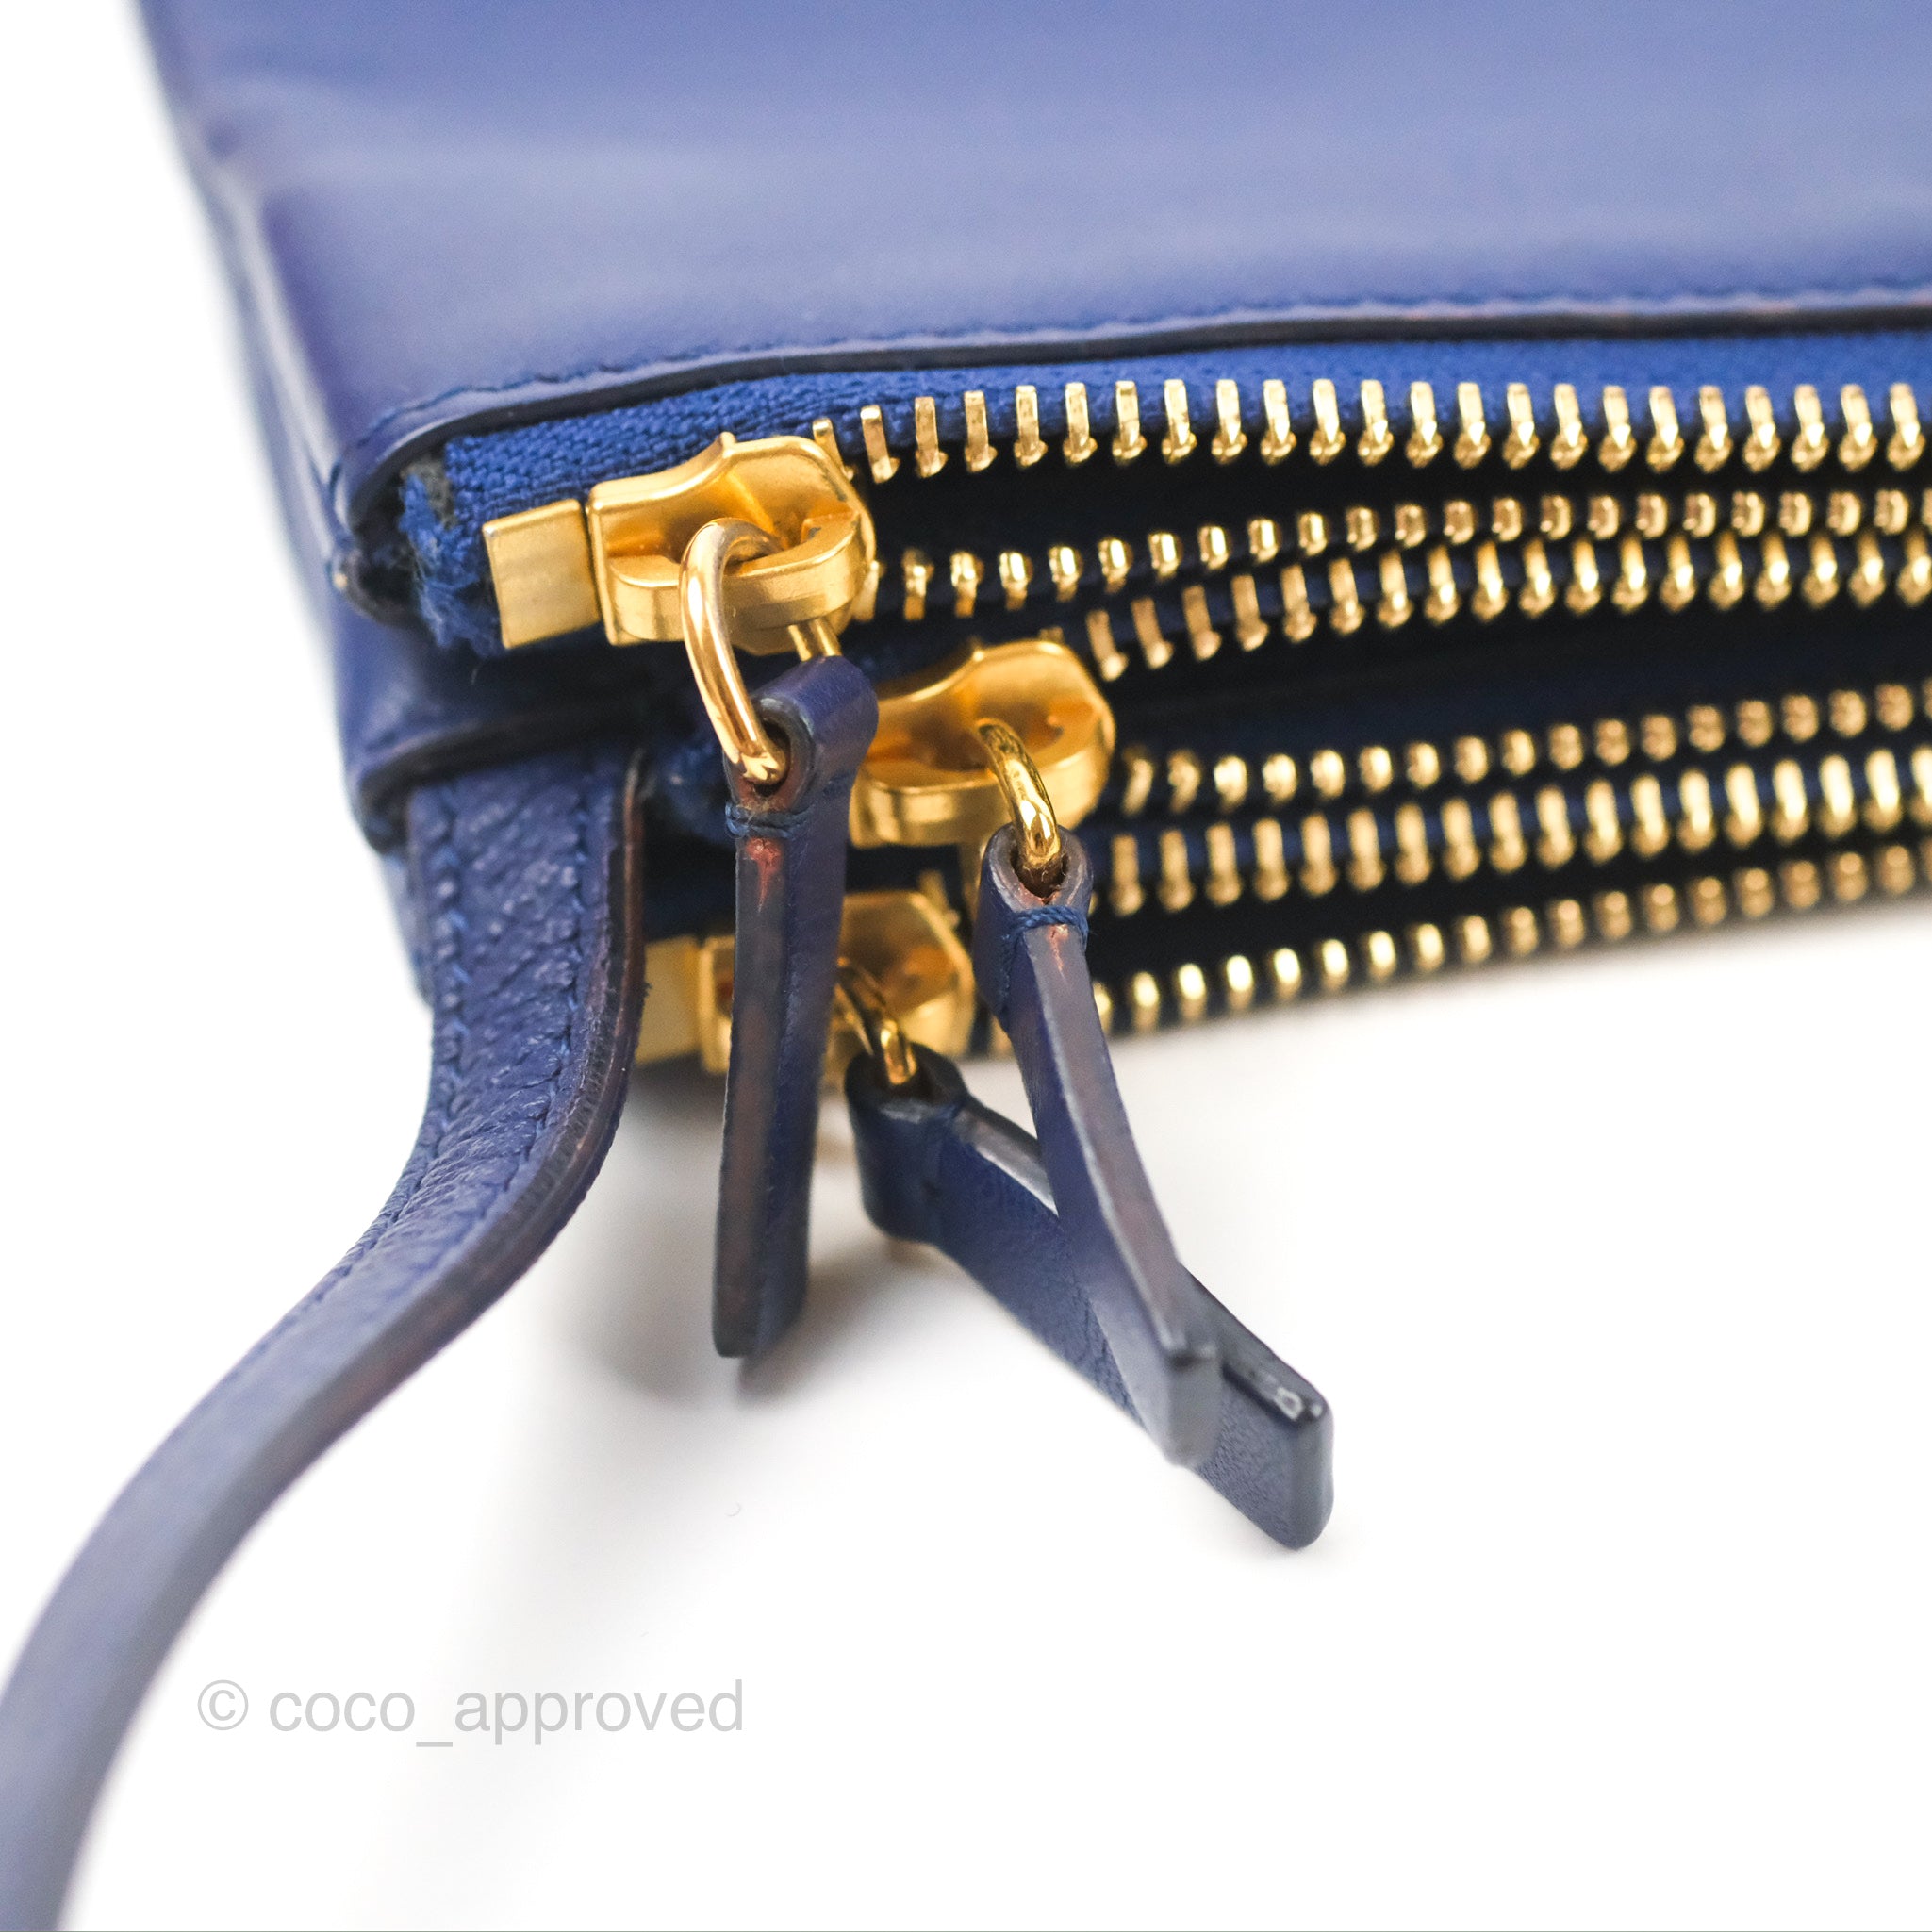 Celine Trio Crossbody Bag Leather Small Blue 6842523